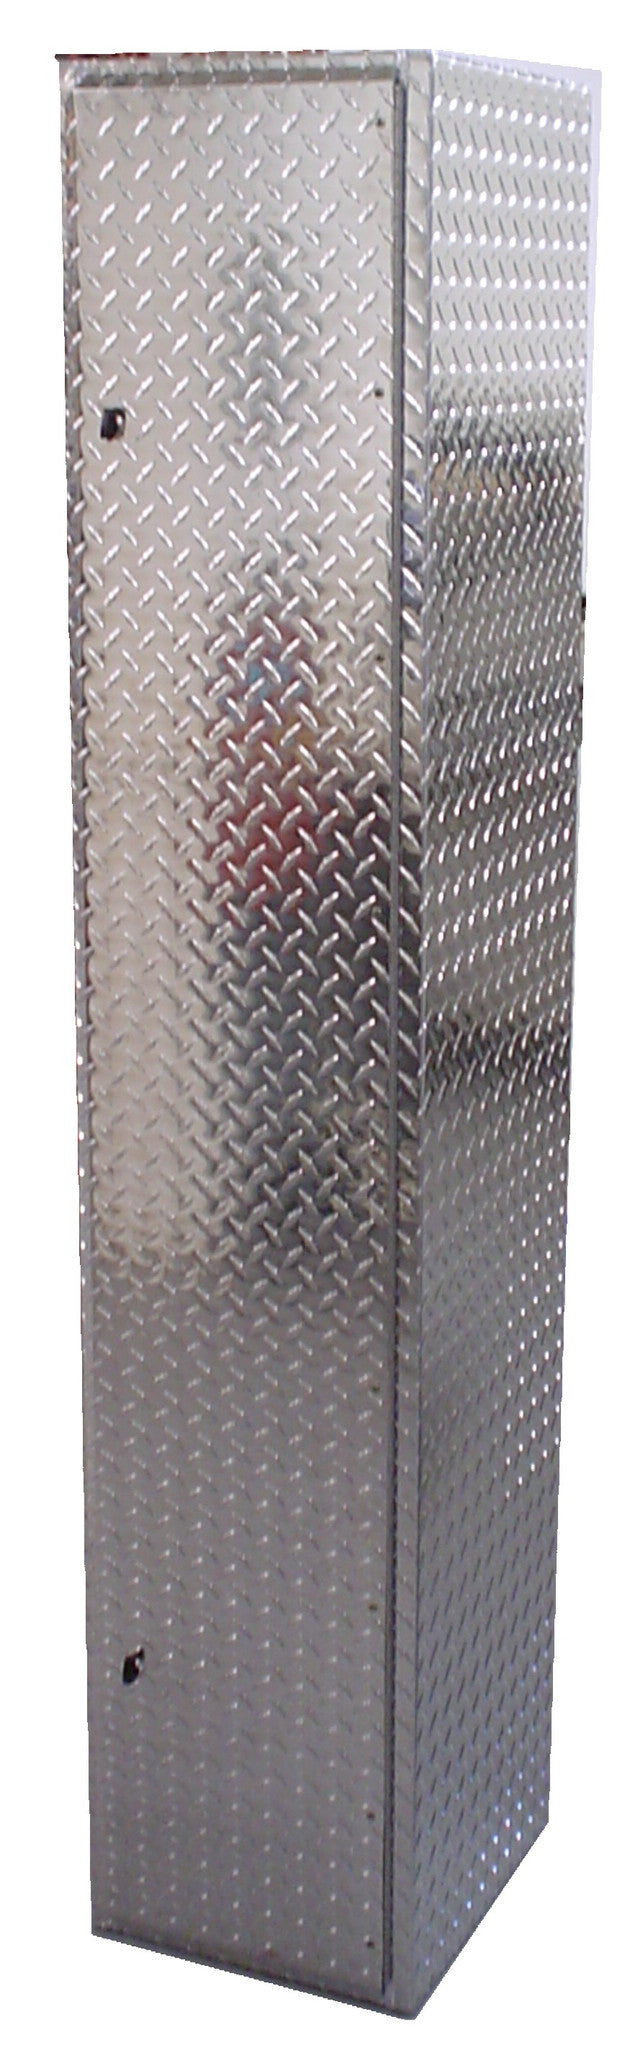 Garage Shoe Cabinet - Diamond Plate Aluminum